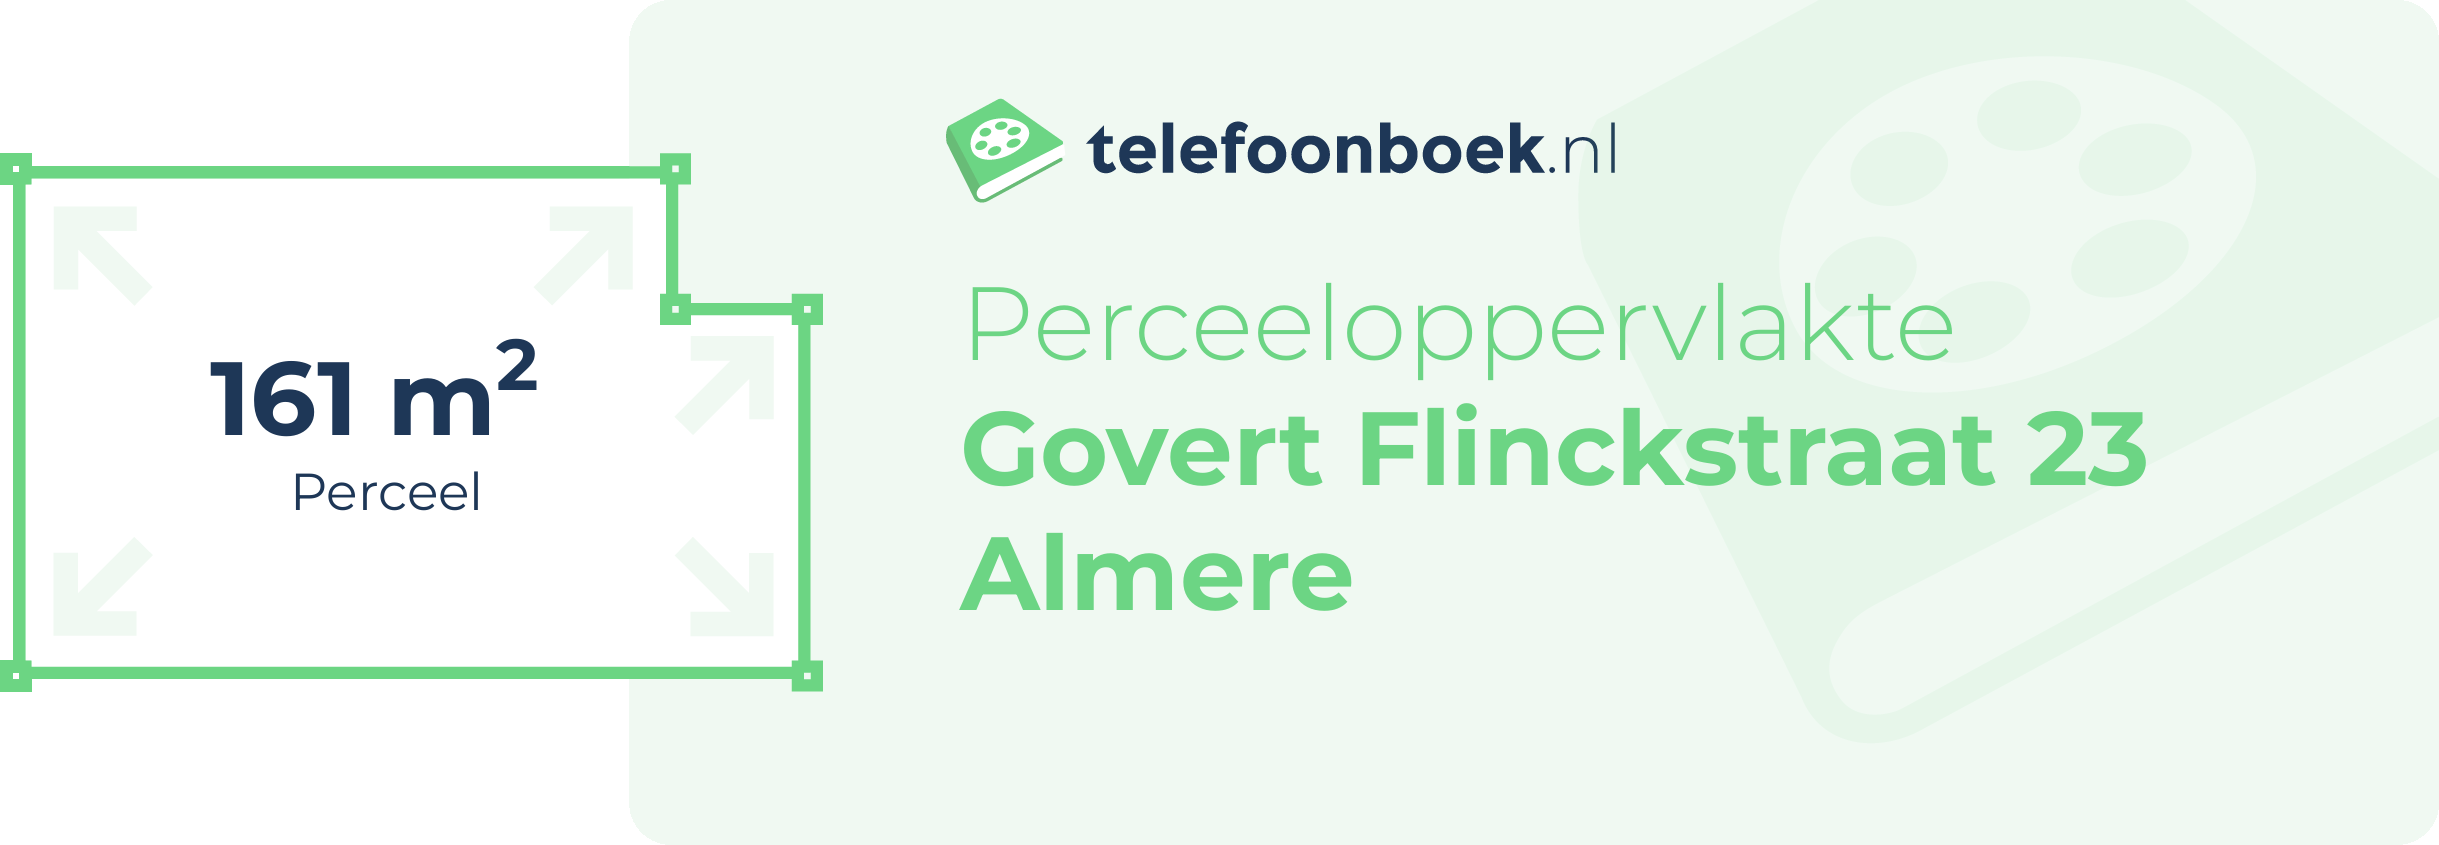 Perceeloppervlakte Govert Flinckstraat 23 Almere